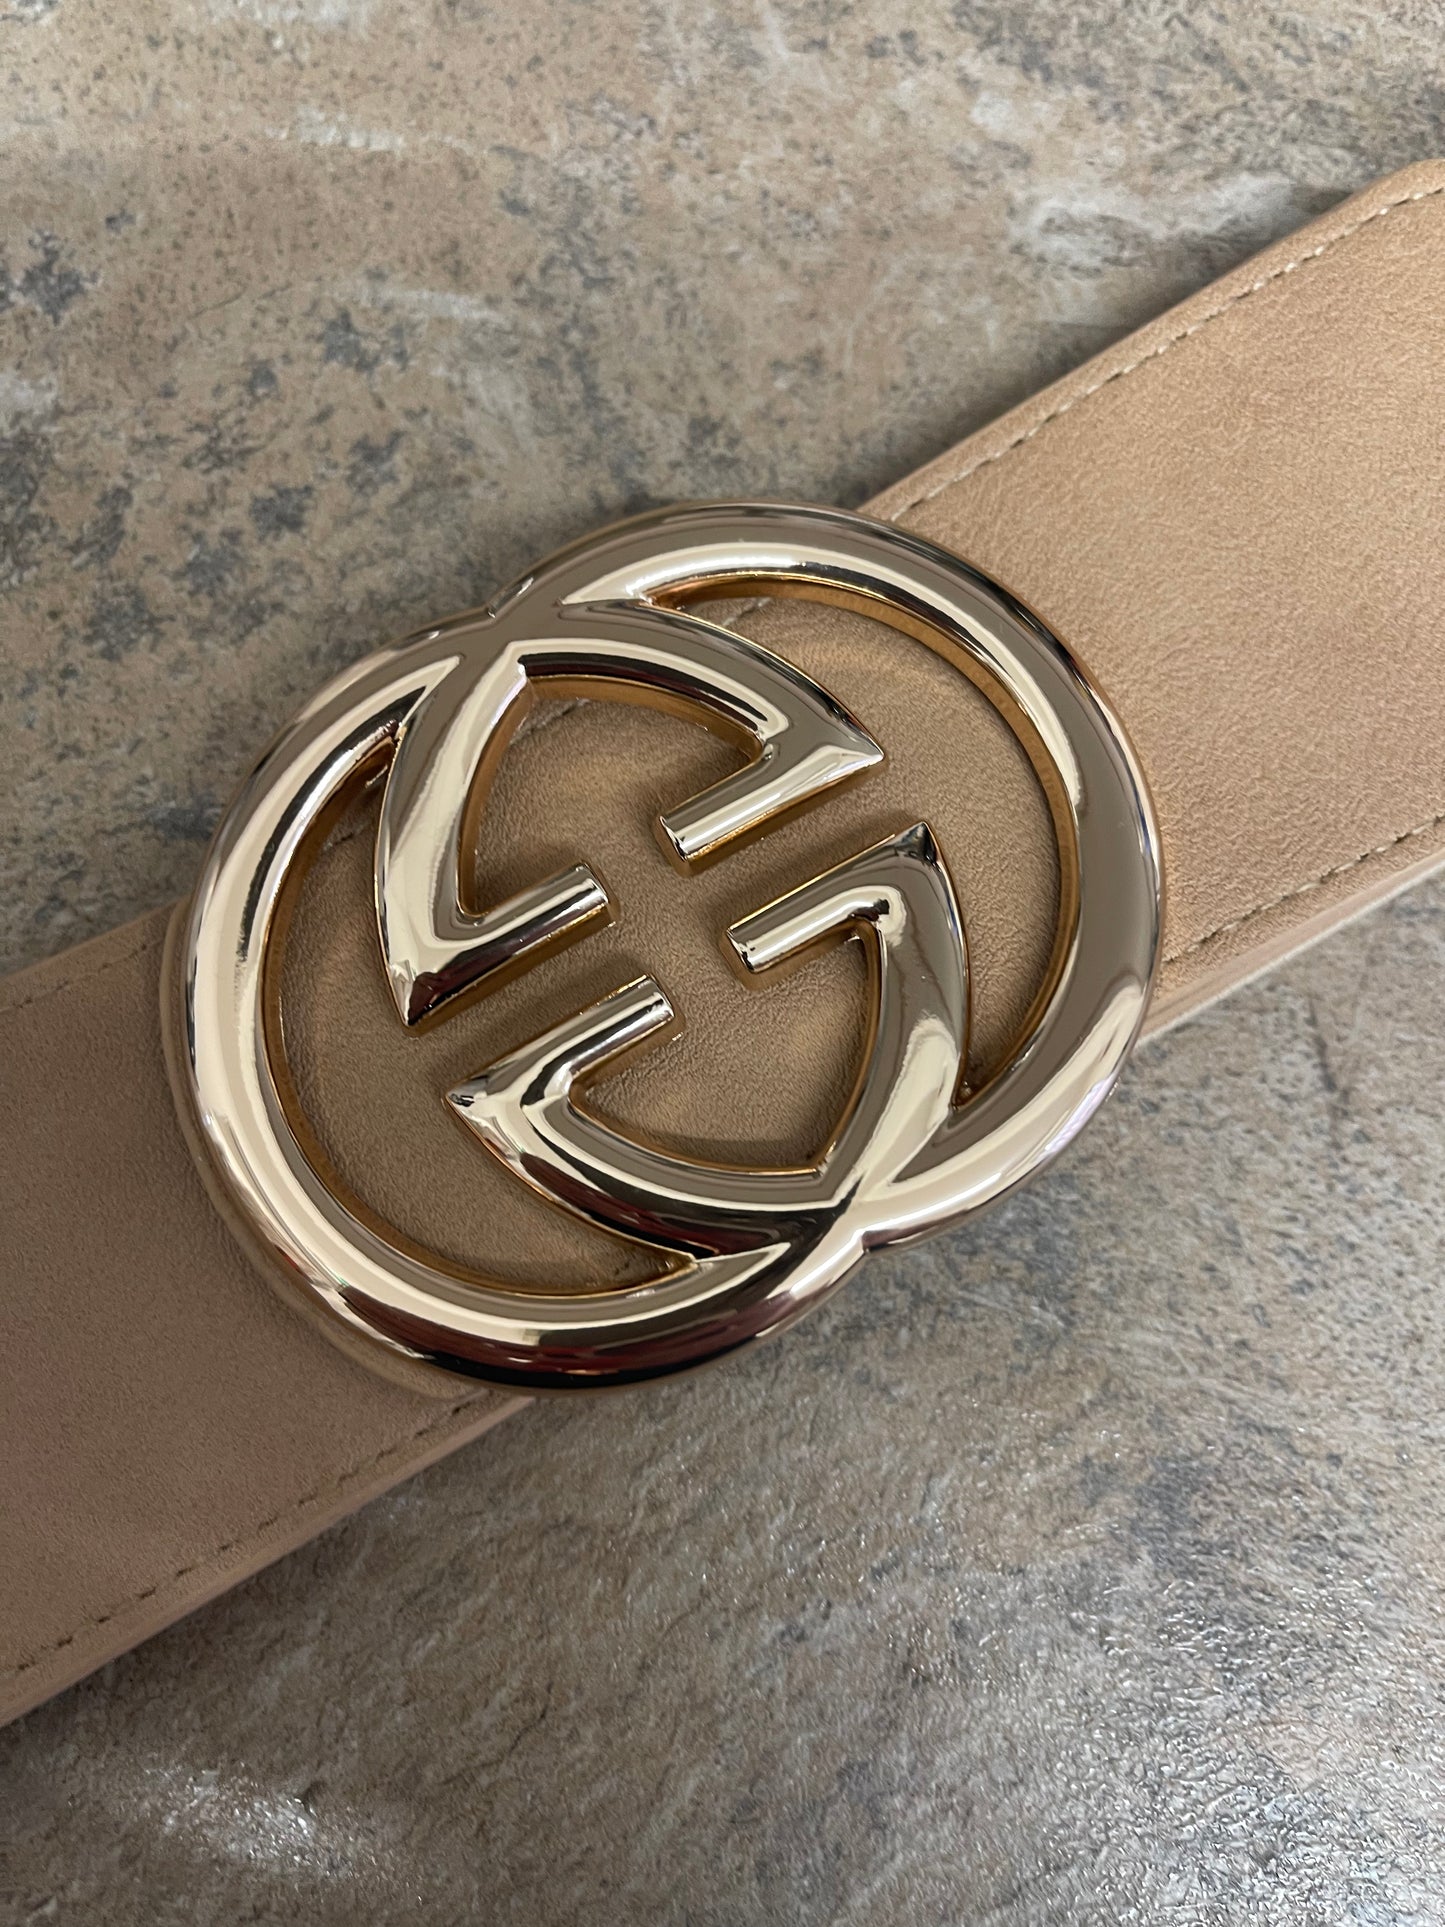 Beige elasticated belt with gold logo buckle